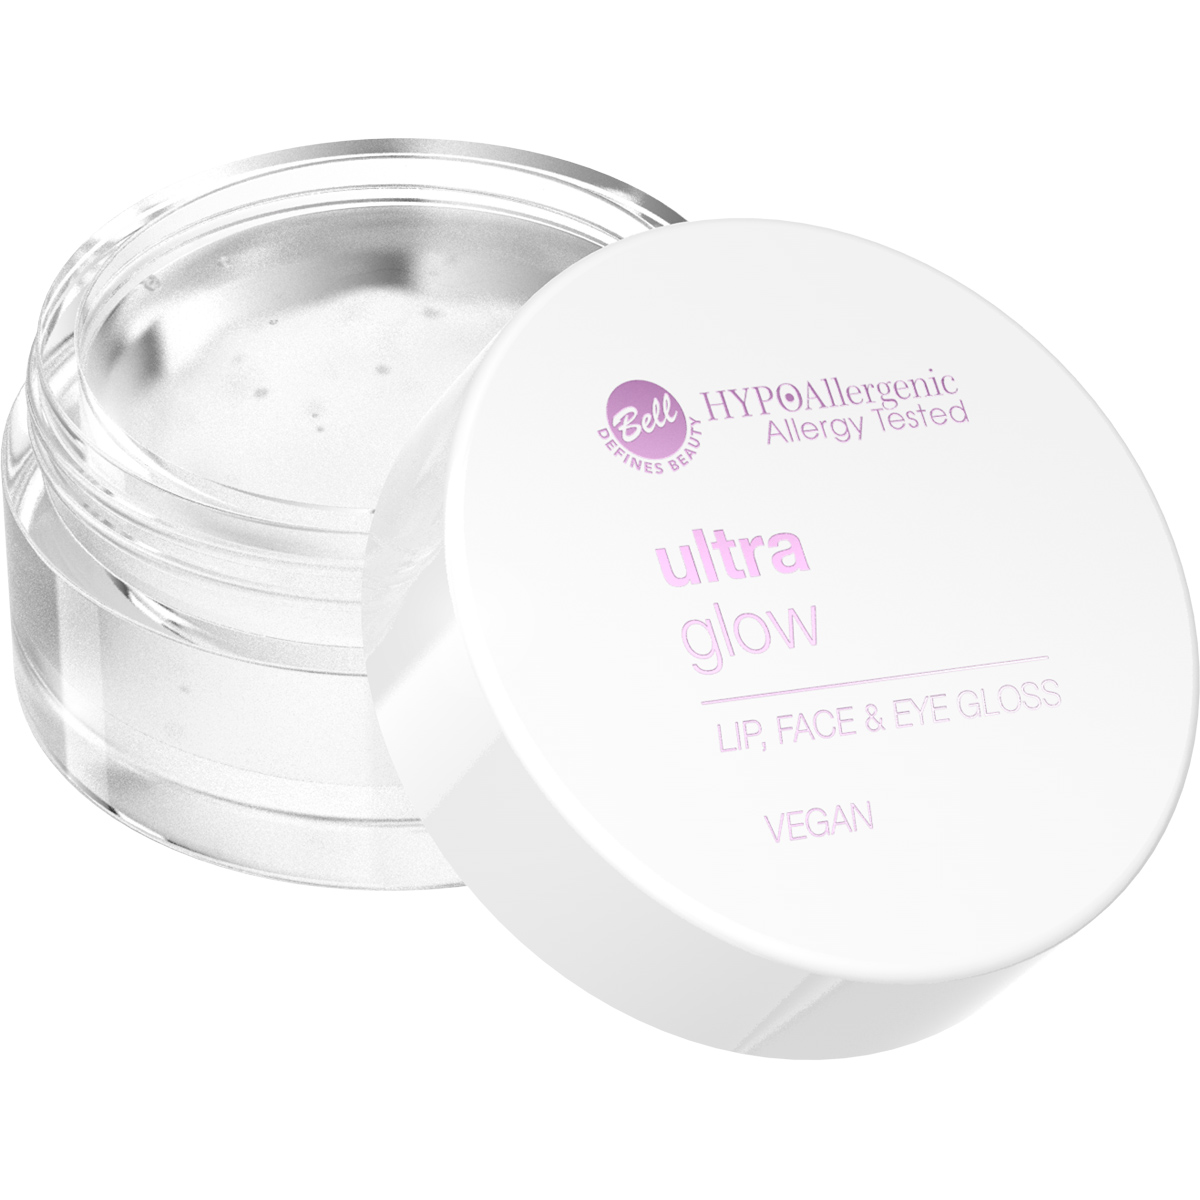 Bell HYPOAllergenic Ultra Light Ultra Glow Face & Eye Gloss